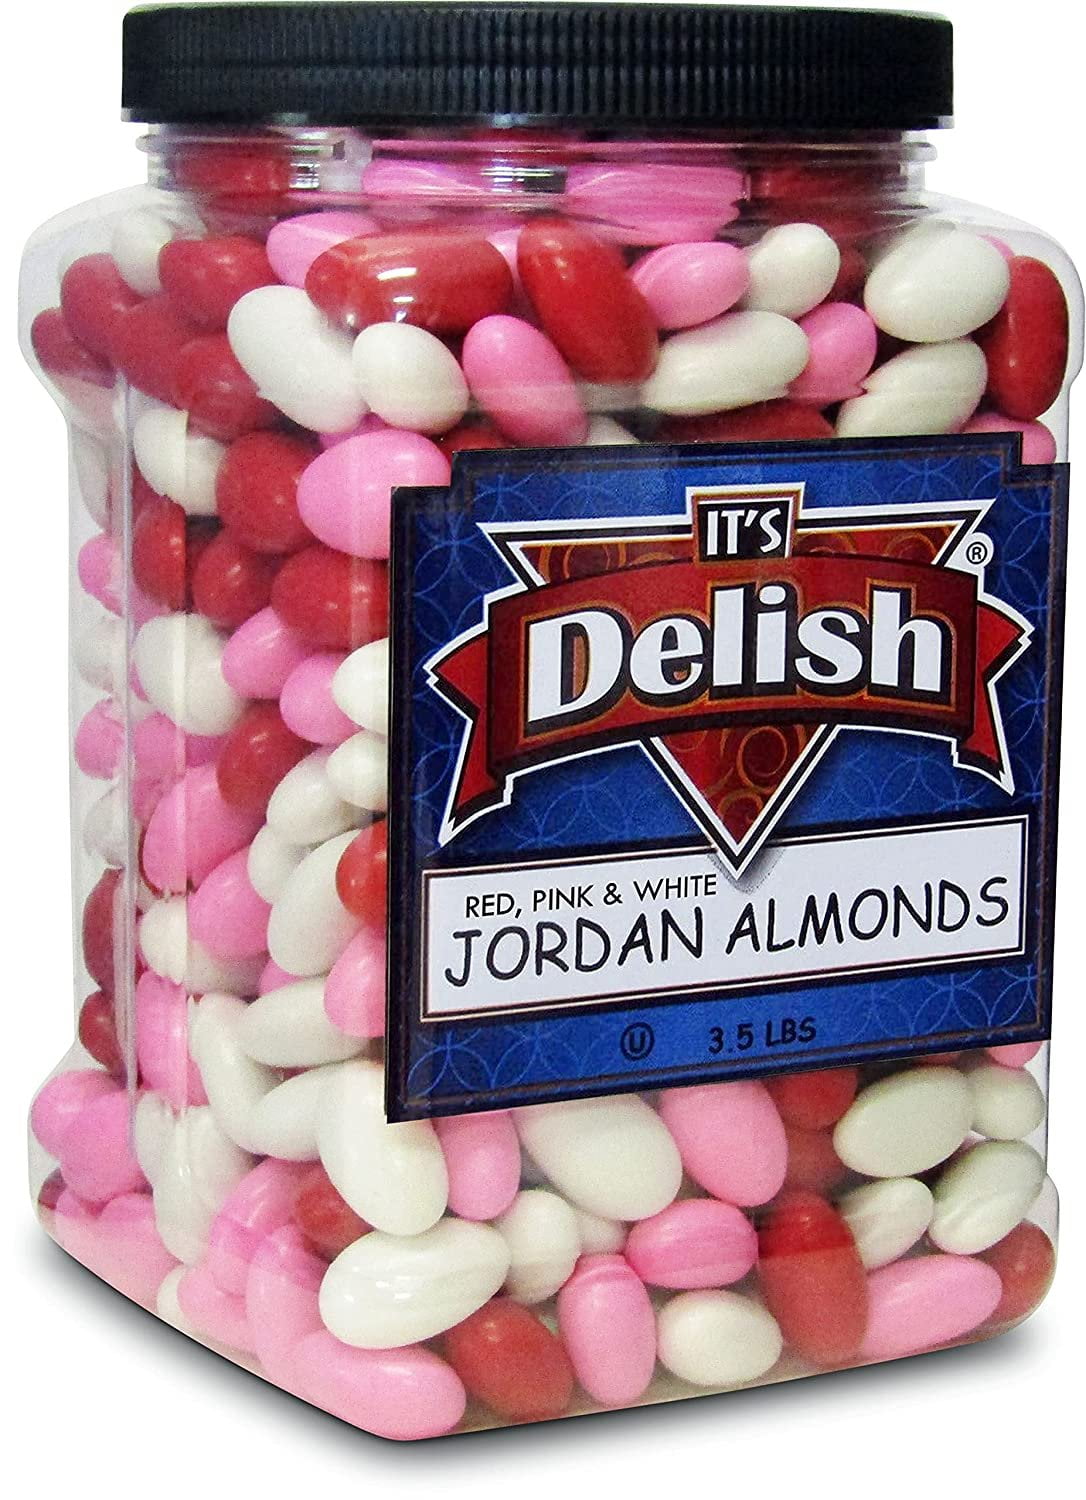 Red Pink & White Jordan Almonds Mix by It's Delish, 3.5 LBS Jumbo ...